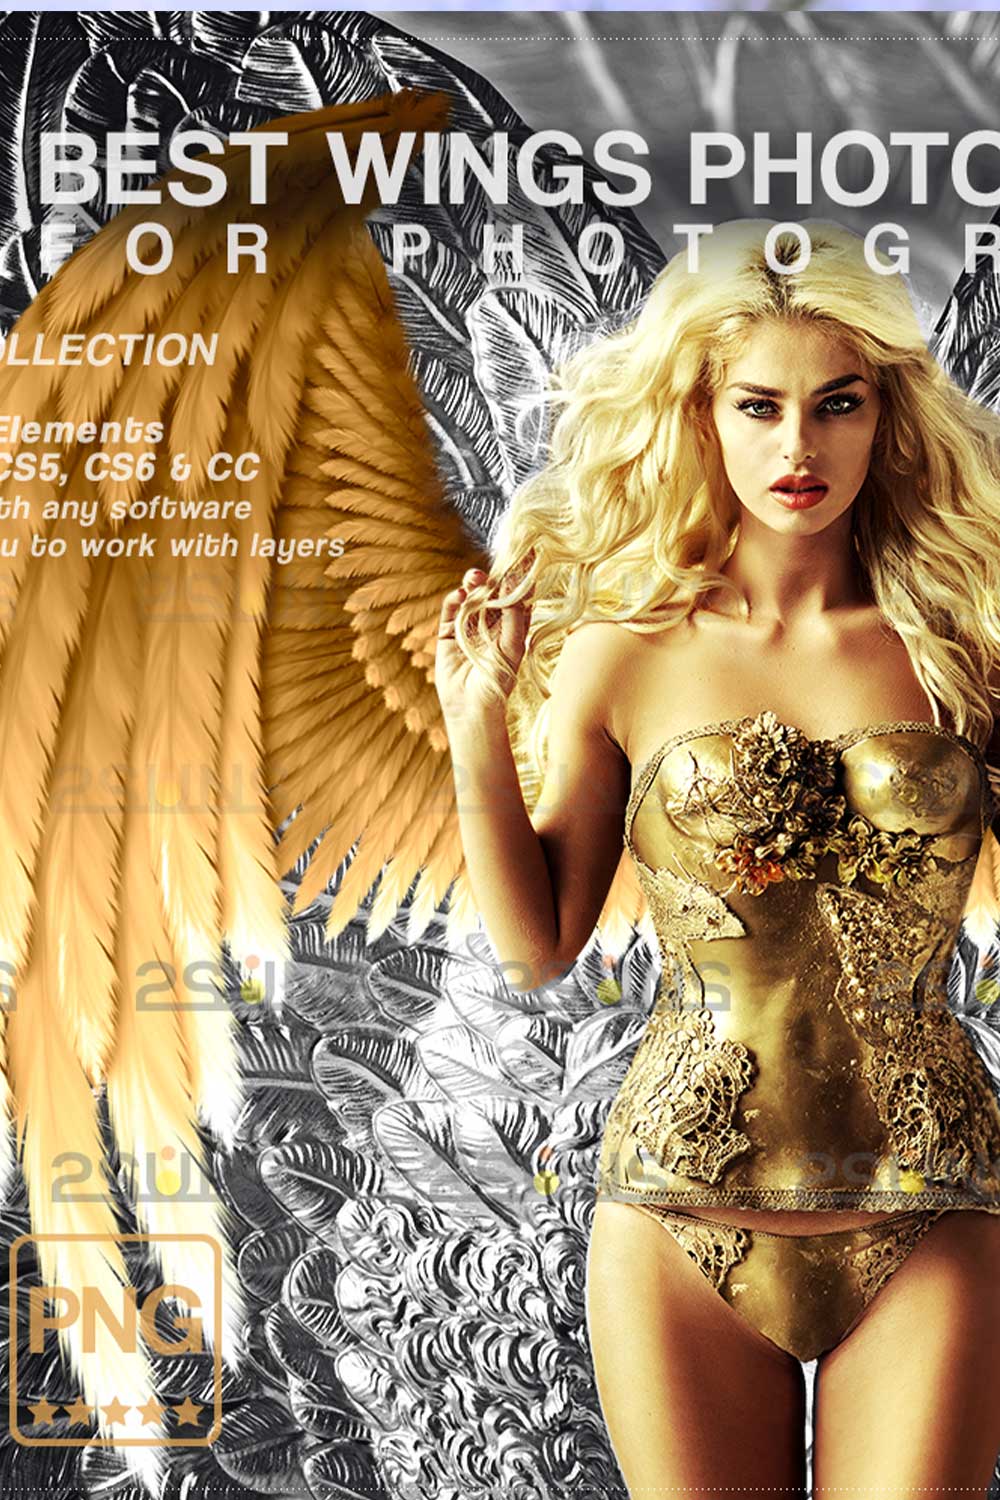 Realistic Black White Gold Angel Wings Photoshop Overlays pinterest image.